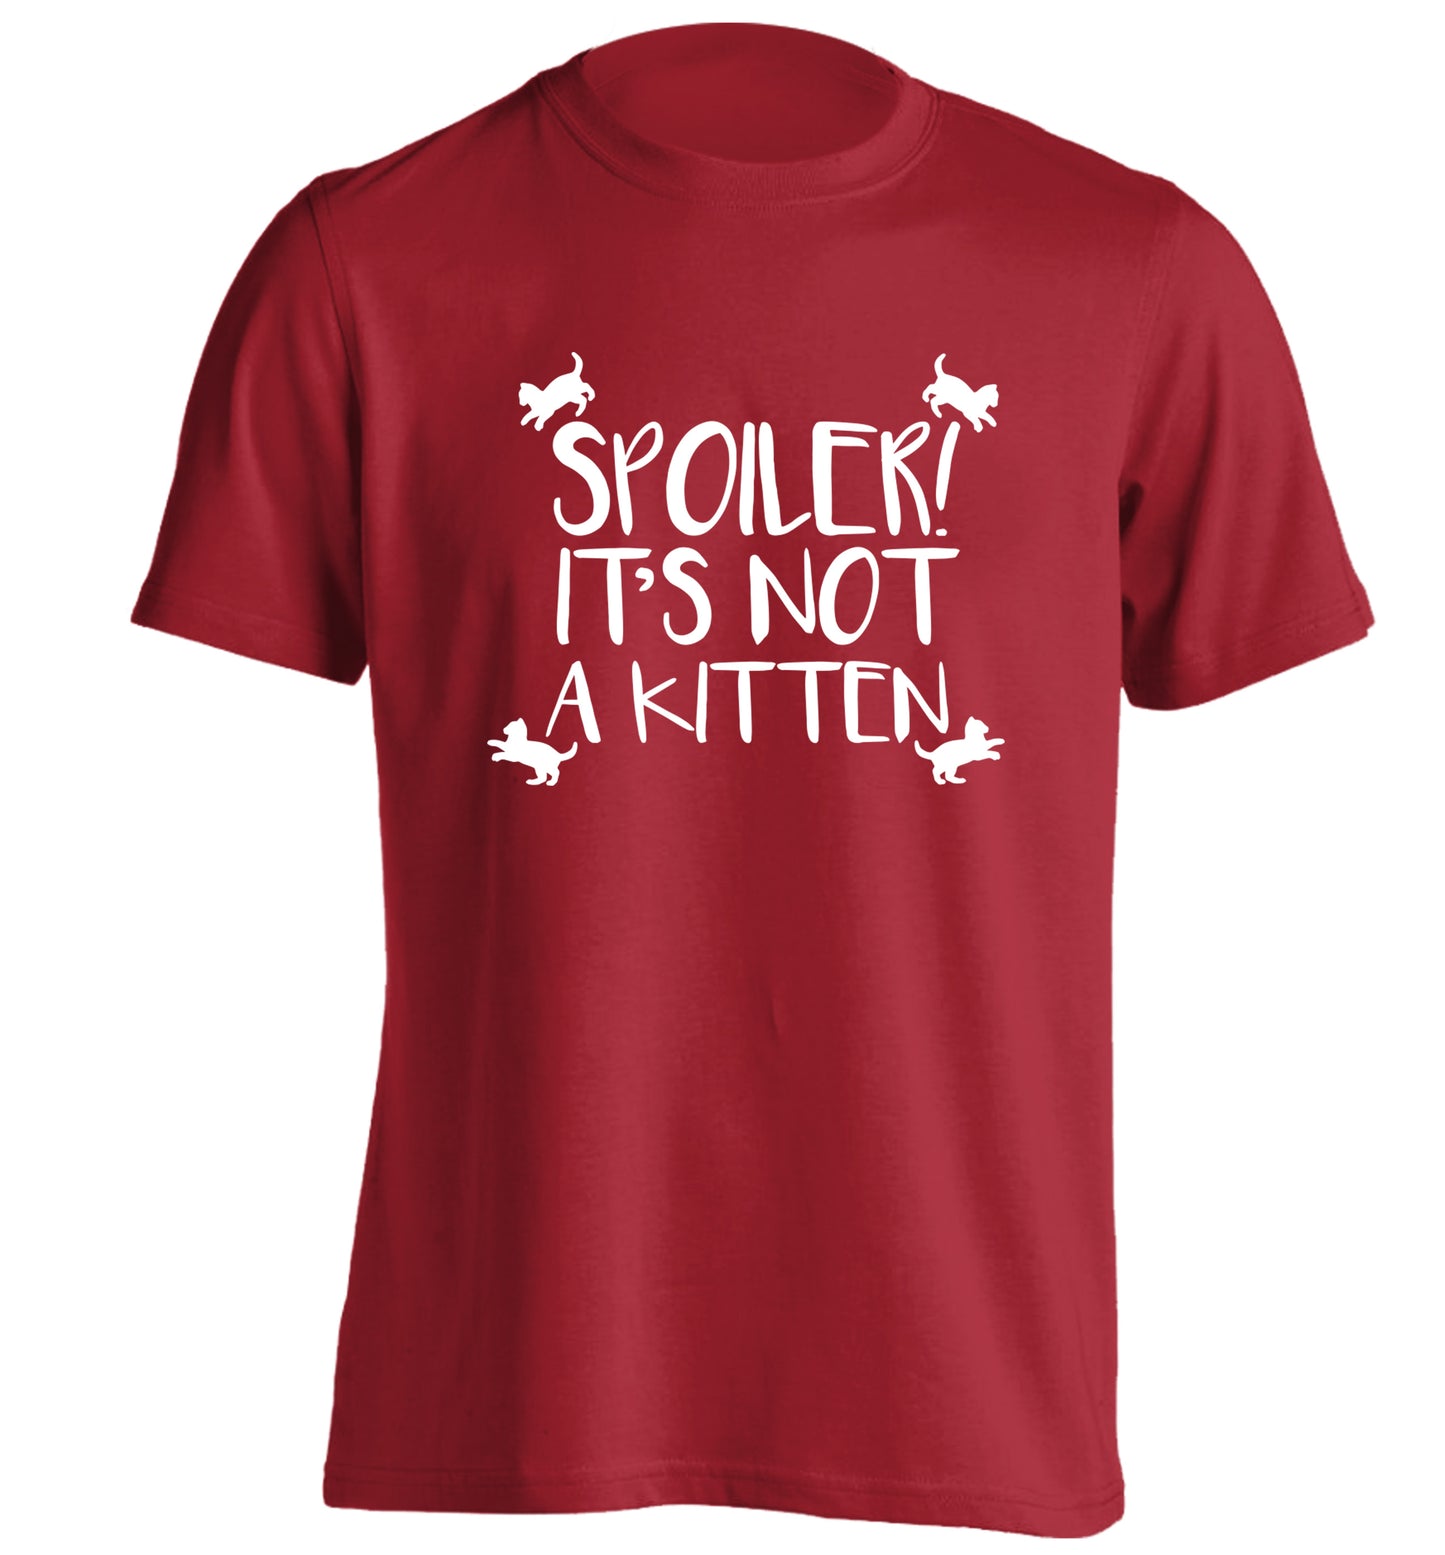 Spoiler it's not a kitten adults unisex red Tshirt 2XL